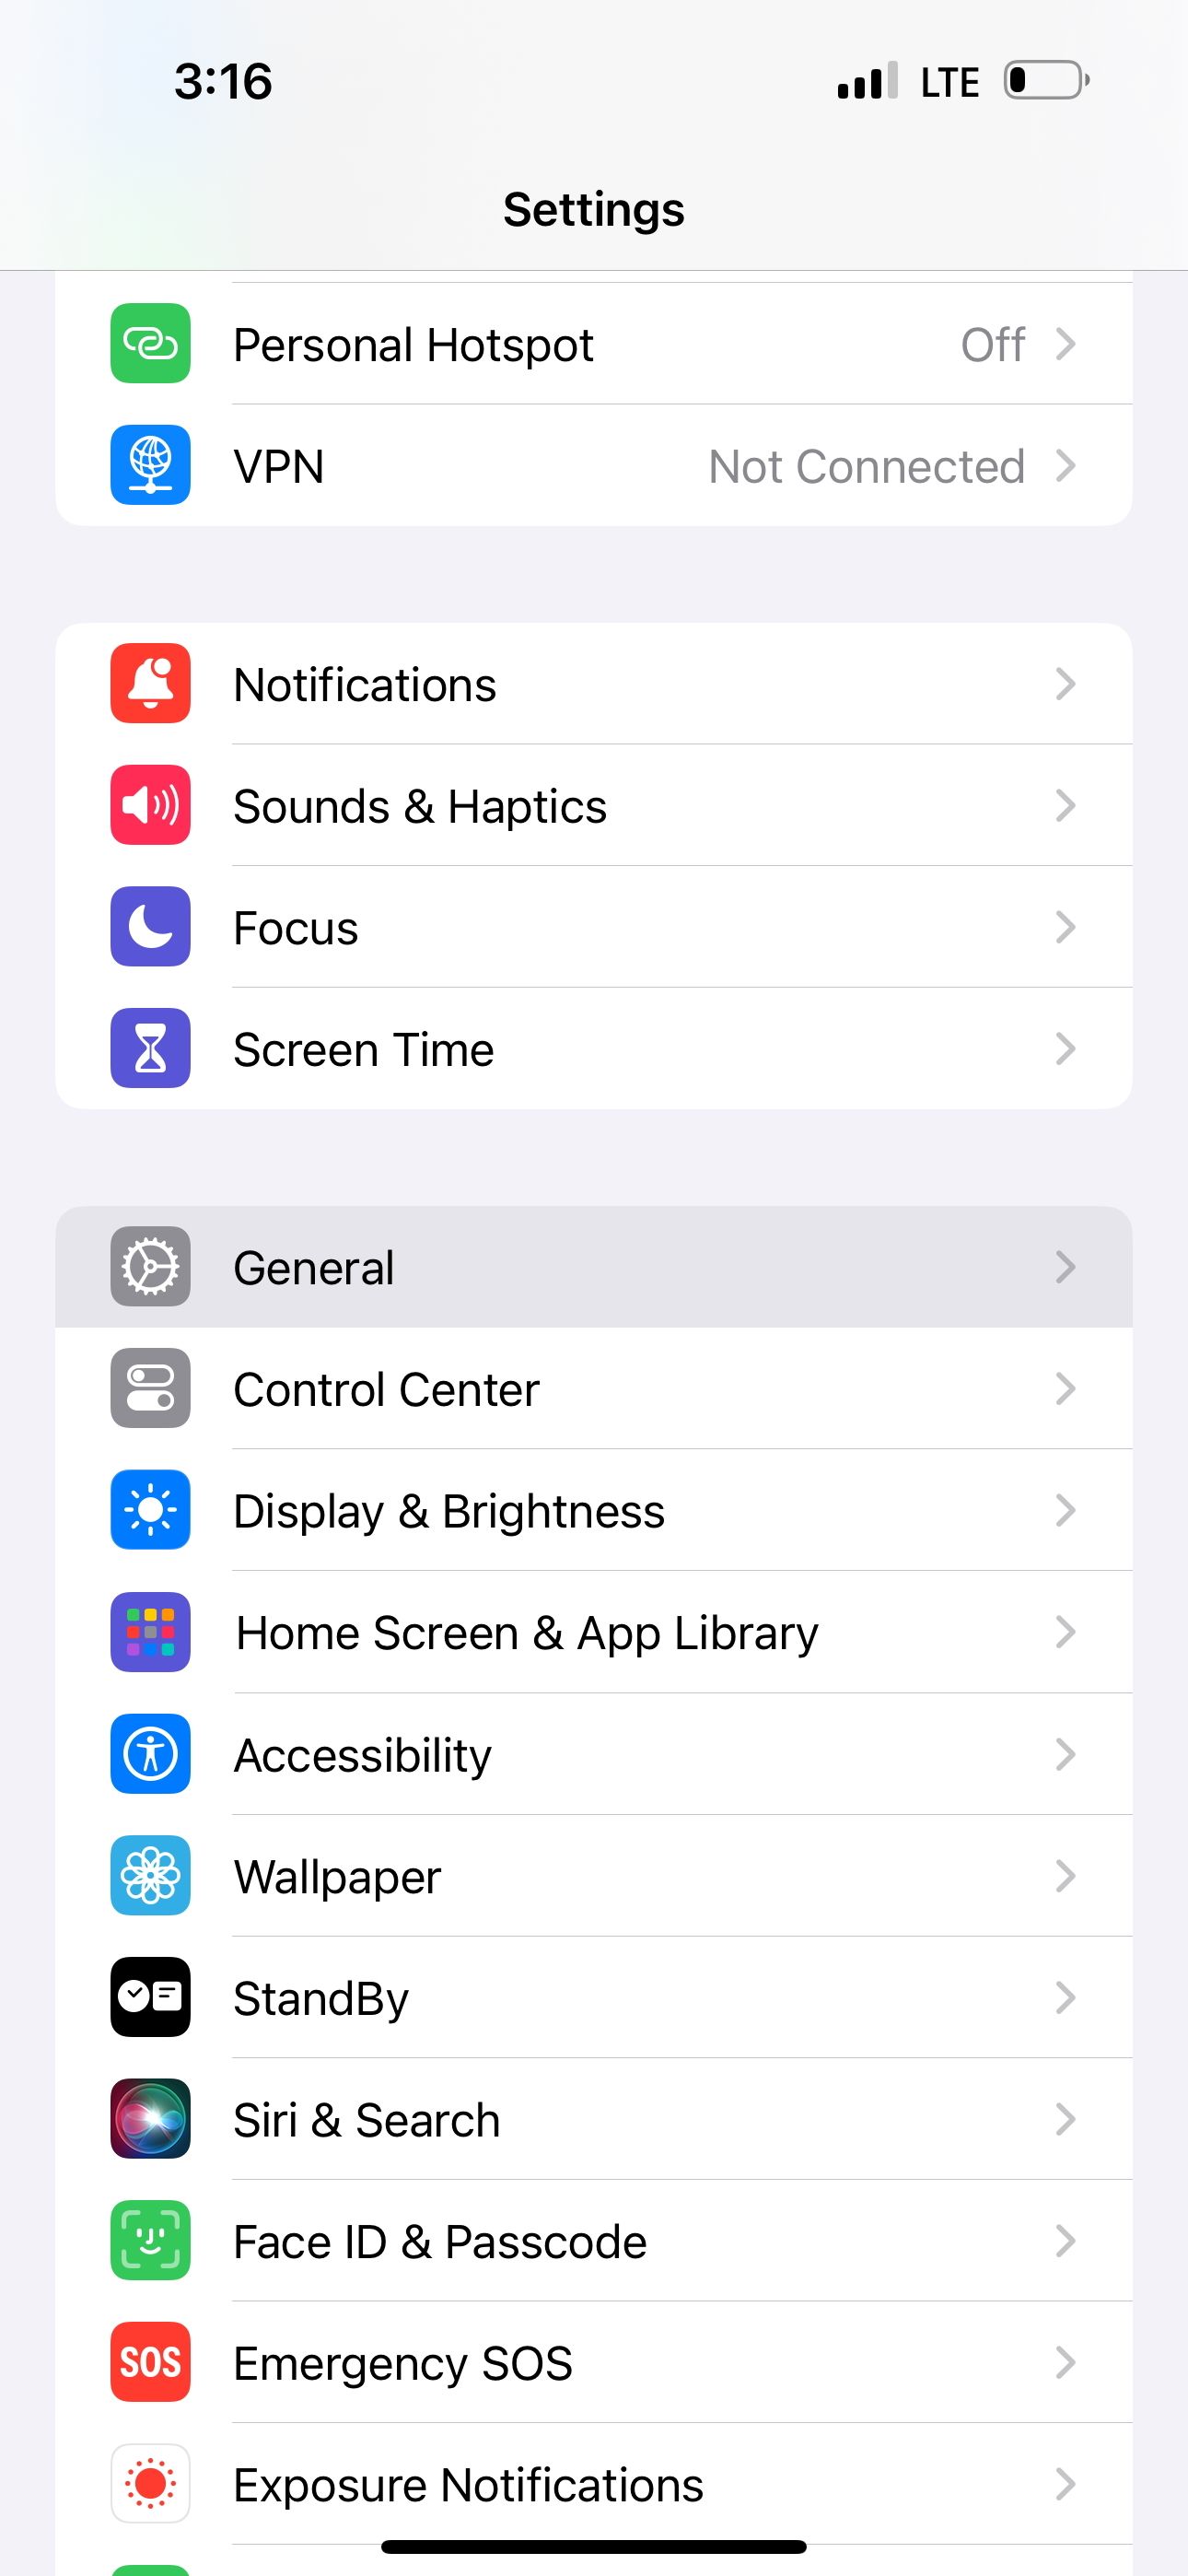 iOS settings menu highlighting General